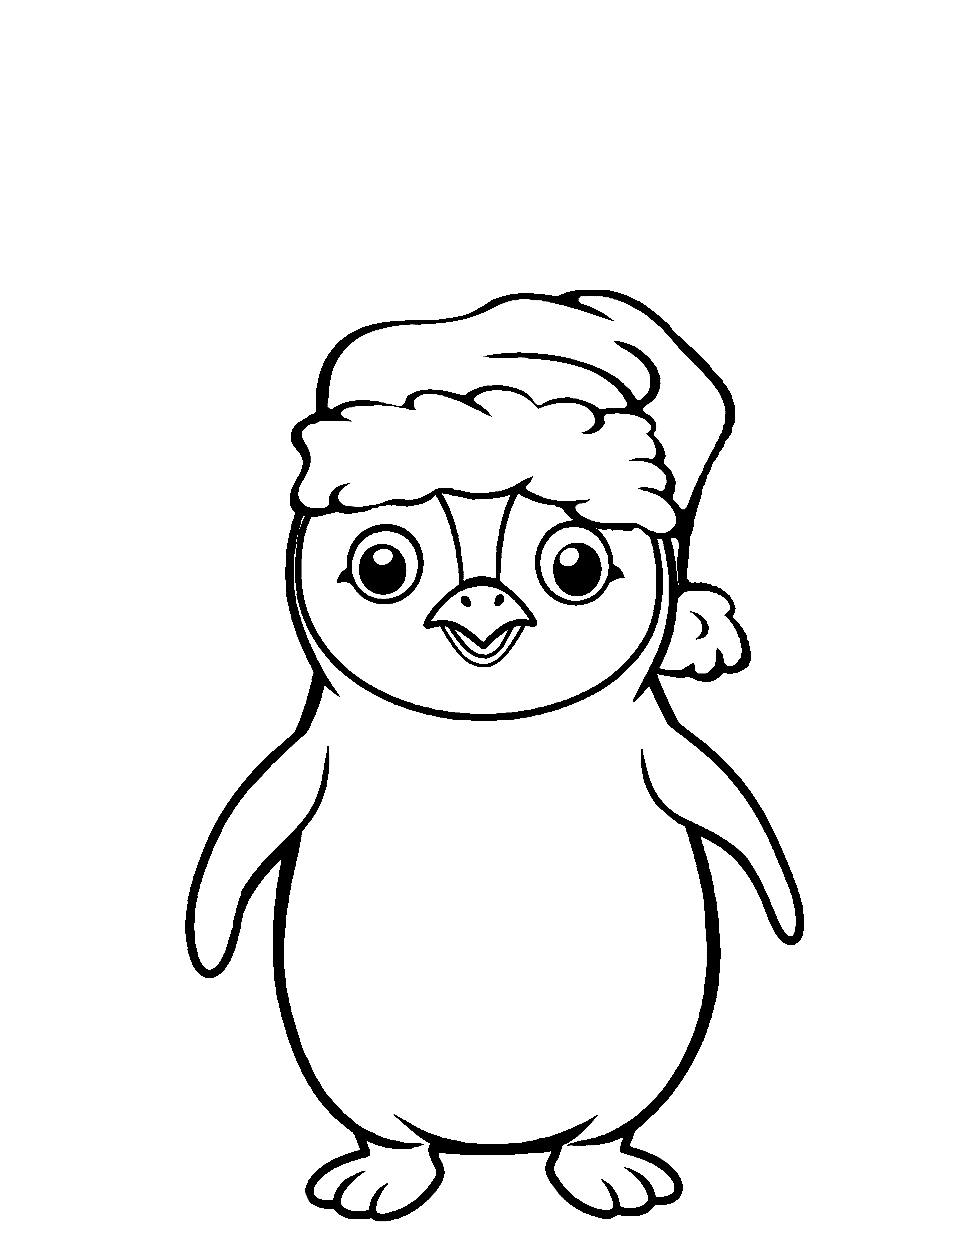 Jolly Penguin Santa Coloring Page - A cheerful penguin wearing a Santa hat.